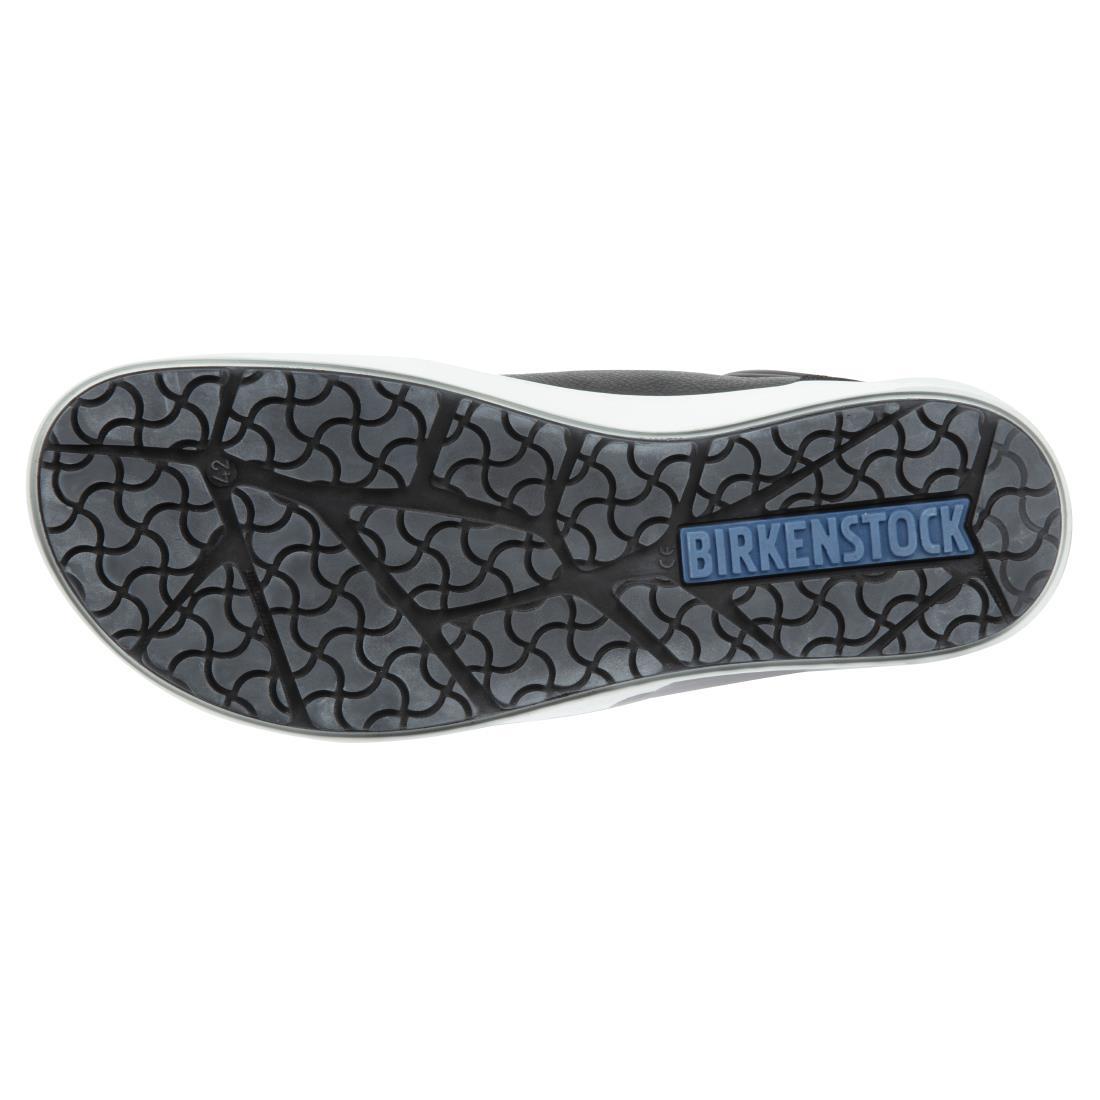 Birkenstock QS 700 Safety Boot Black 38